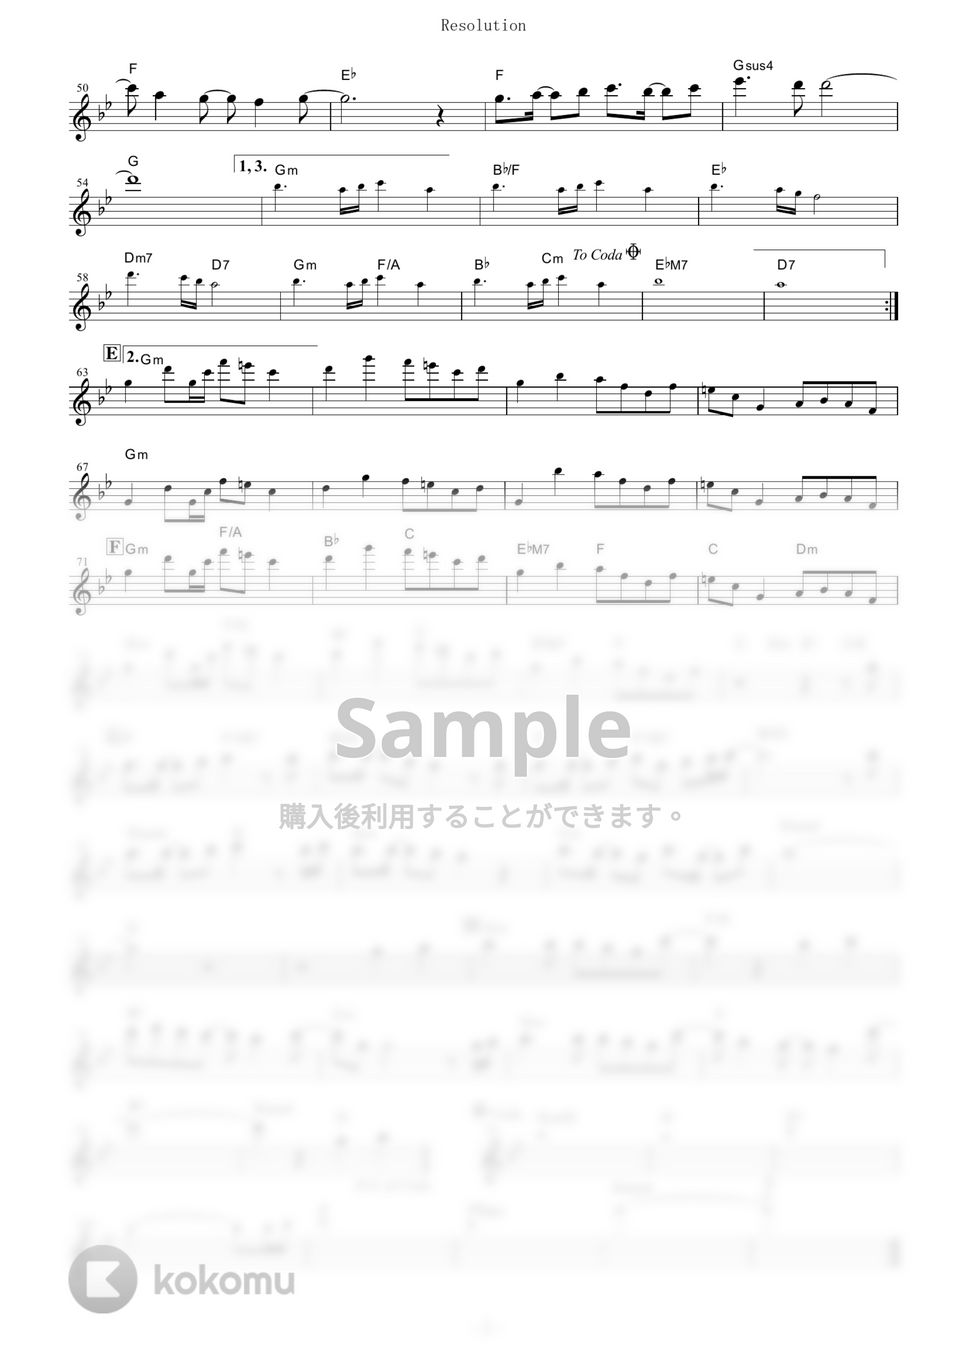 ROmantic Mode - Resolution (『機動新世紀ガンダムX』 / in Bb) by muta-sax